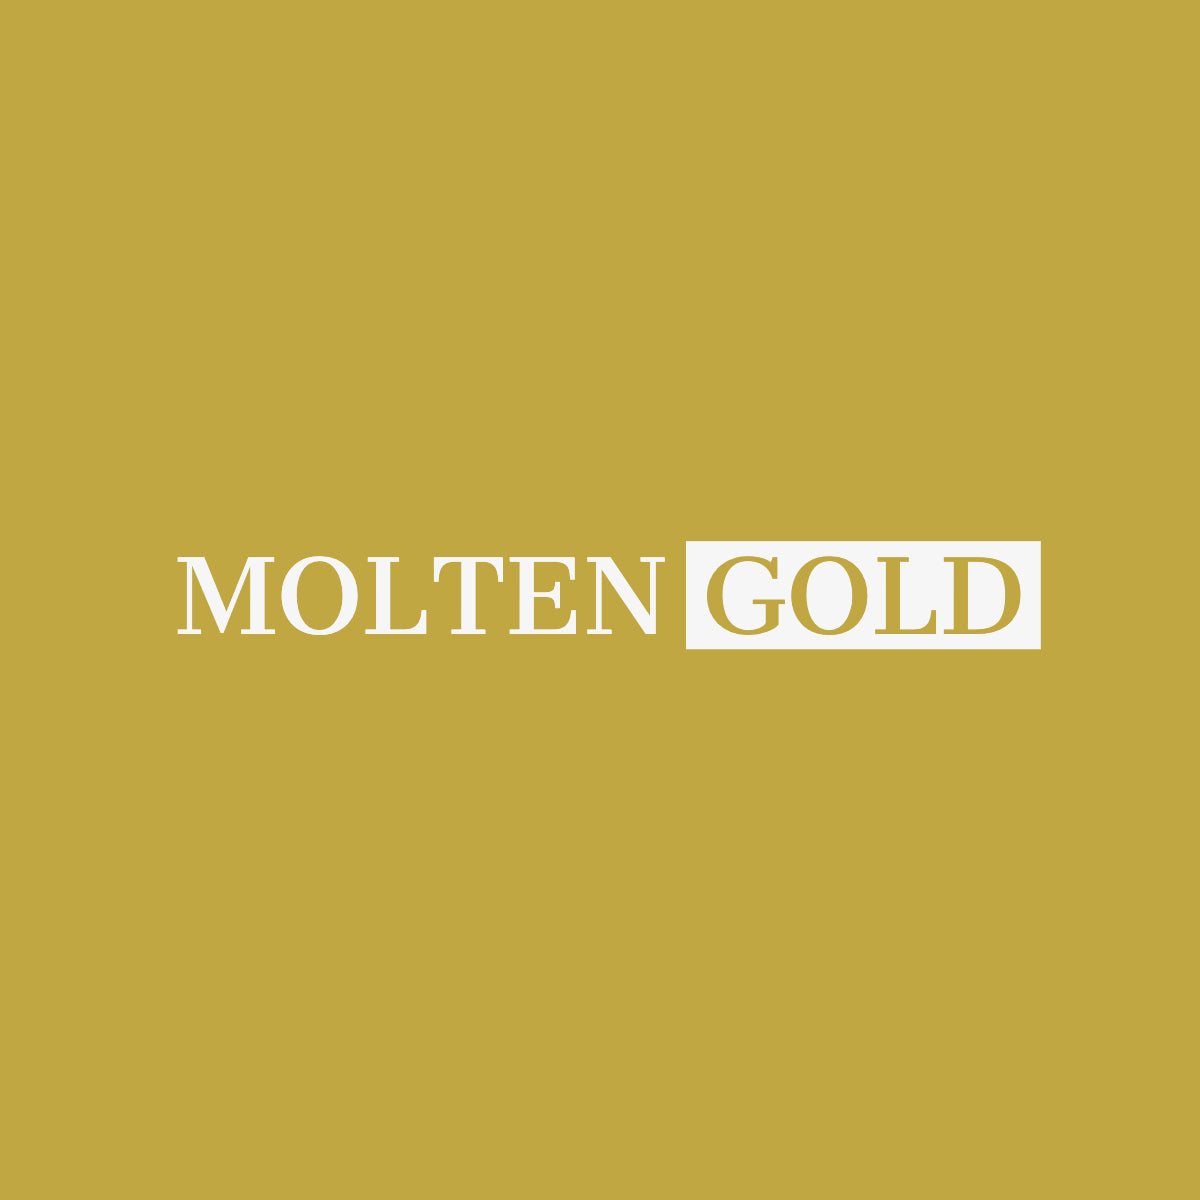 Molten-gold